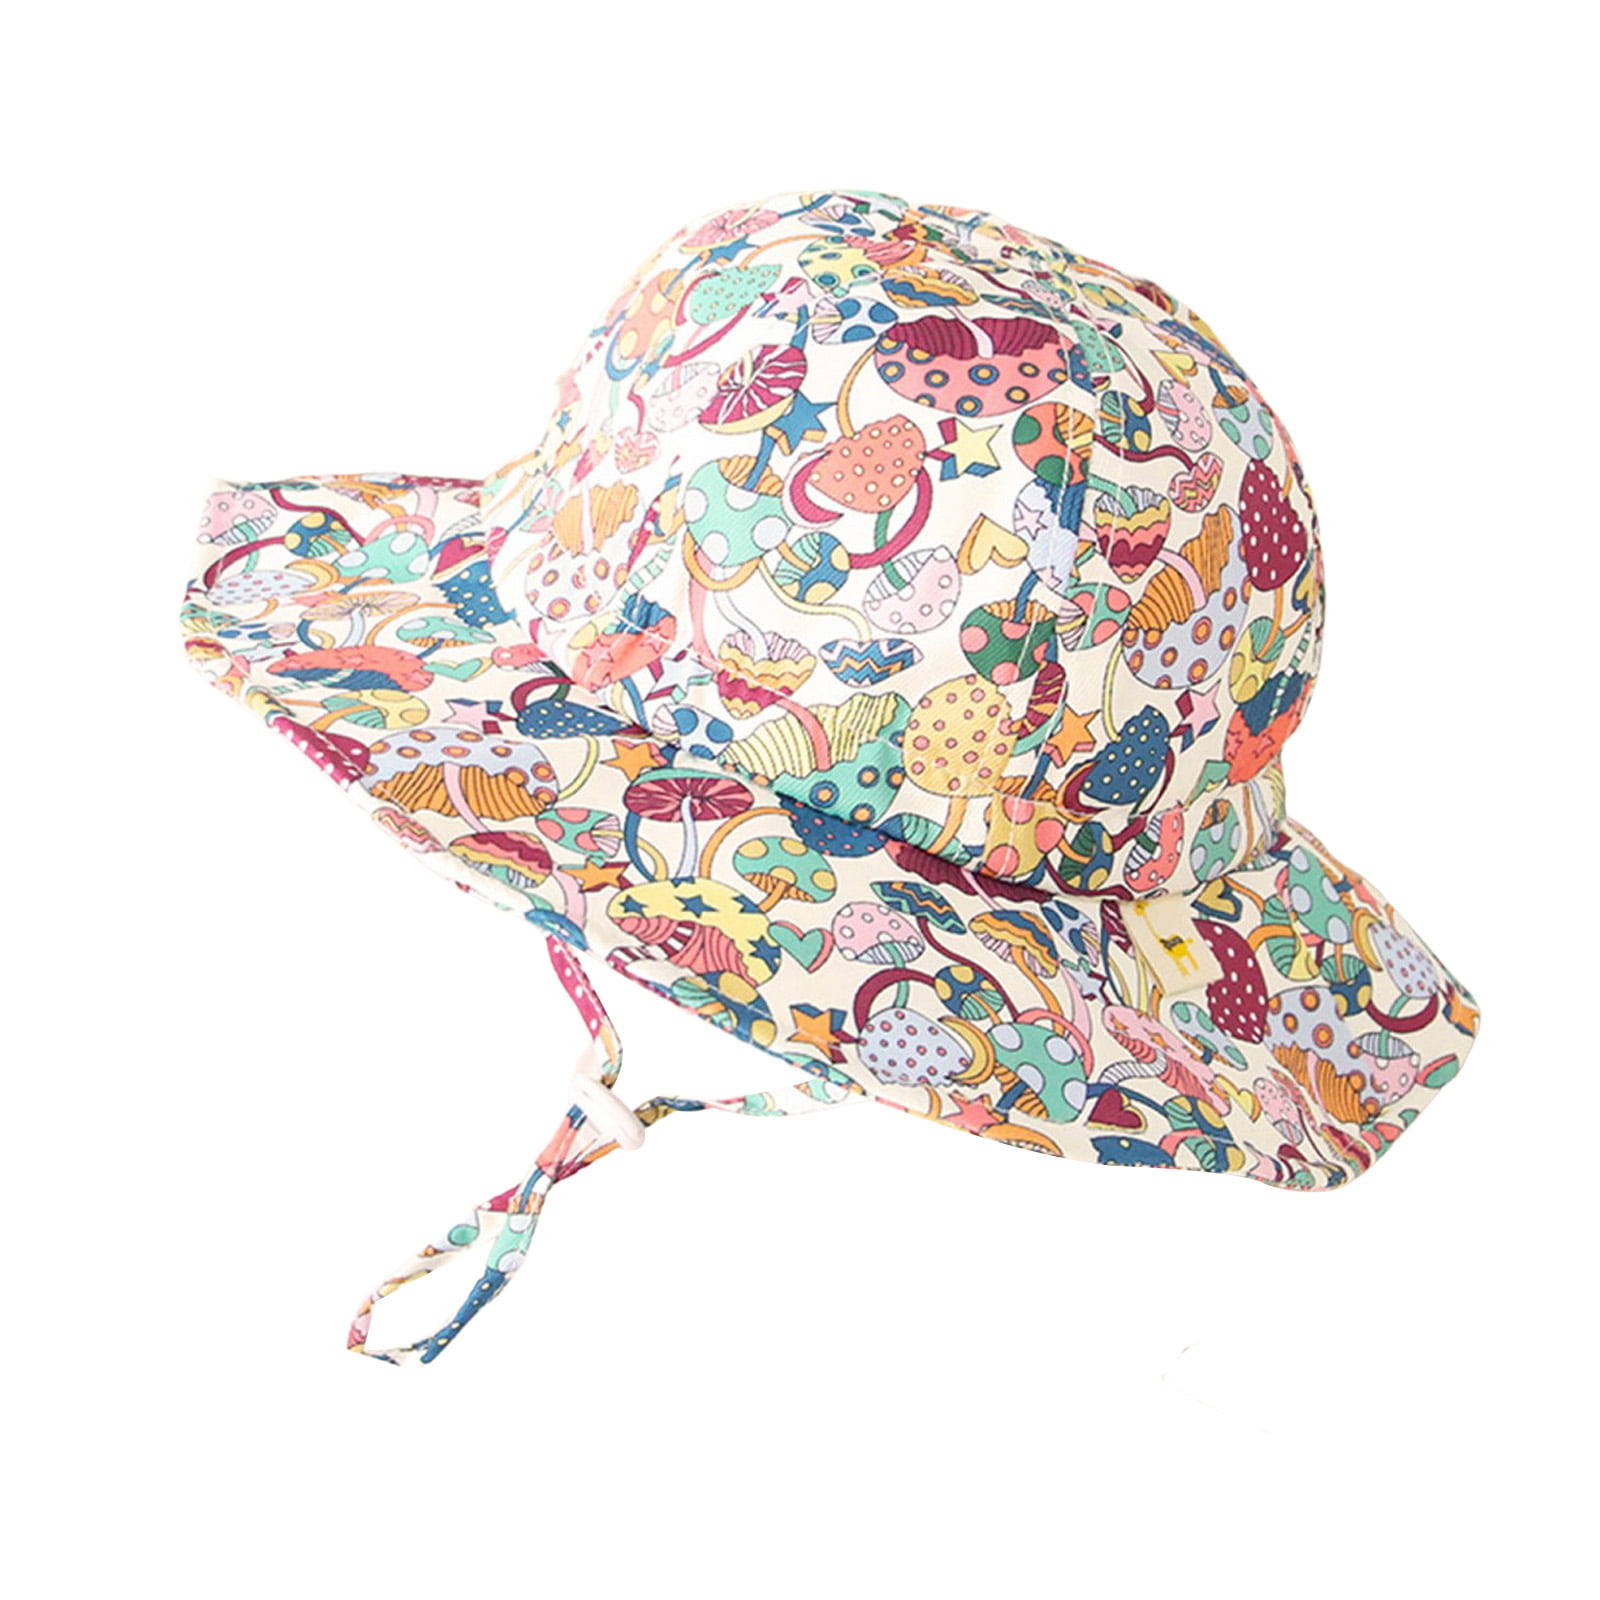 NUOLUX 1pc Fashion Bucket Hat Fisherman Hat Cotton Sun Protection Hat  Rainbow Stripe Sunhat for Women Men (White) 